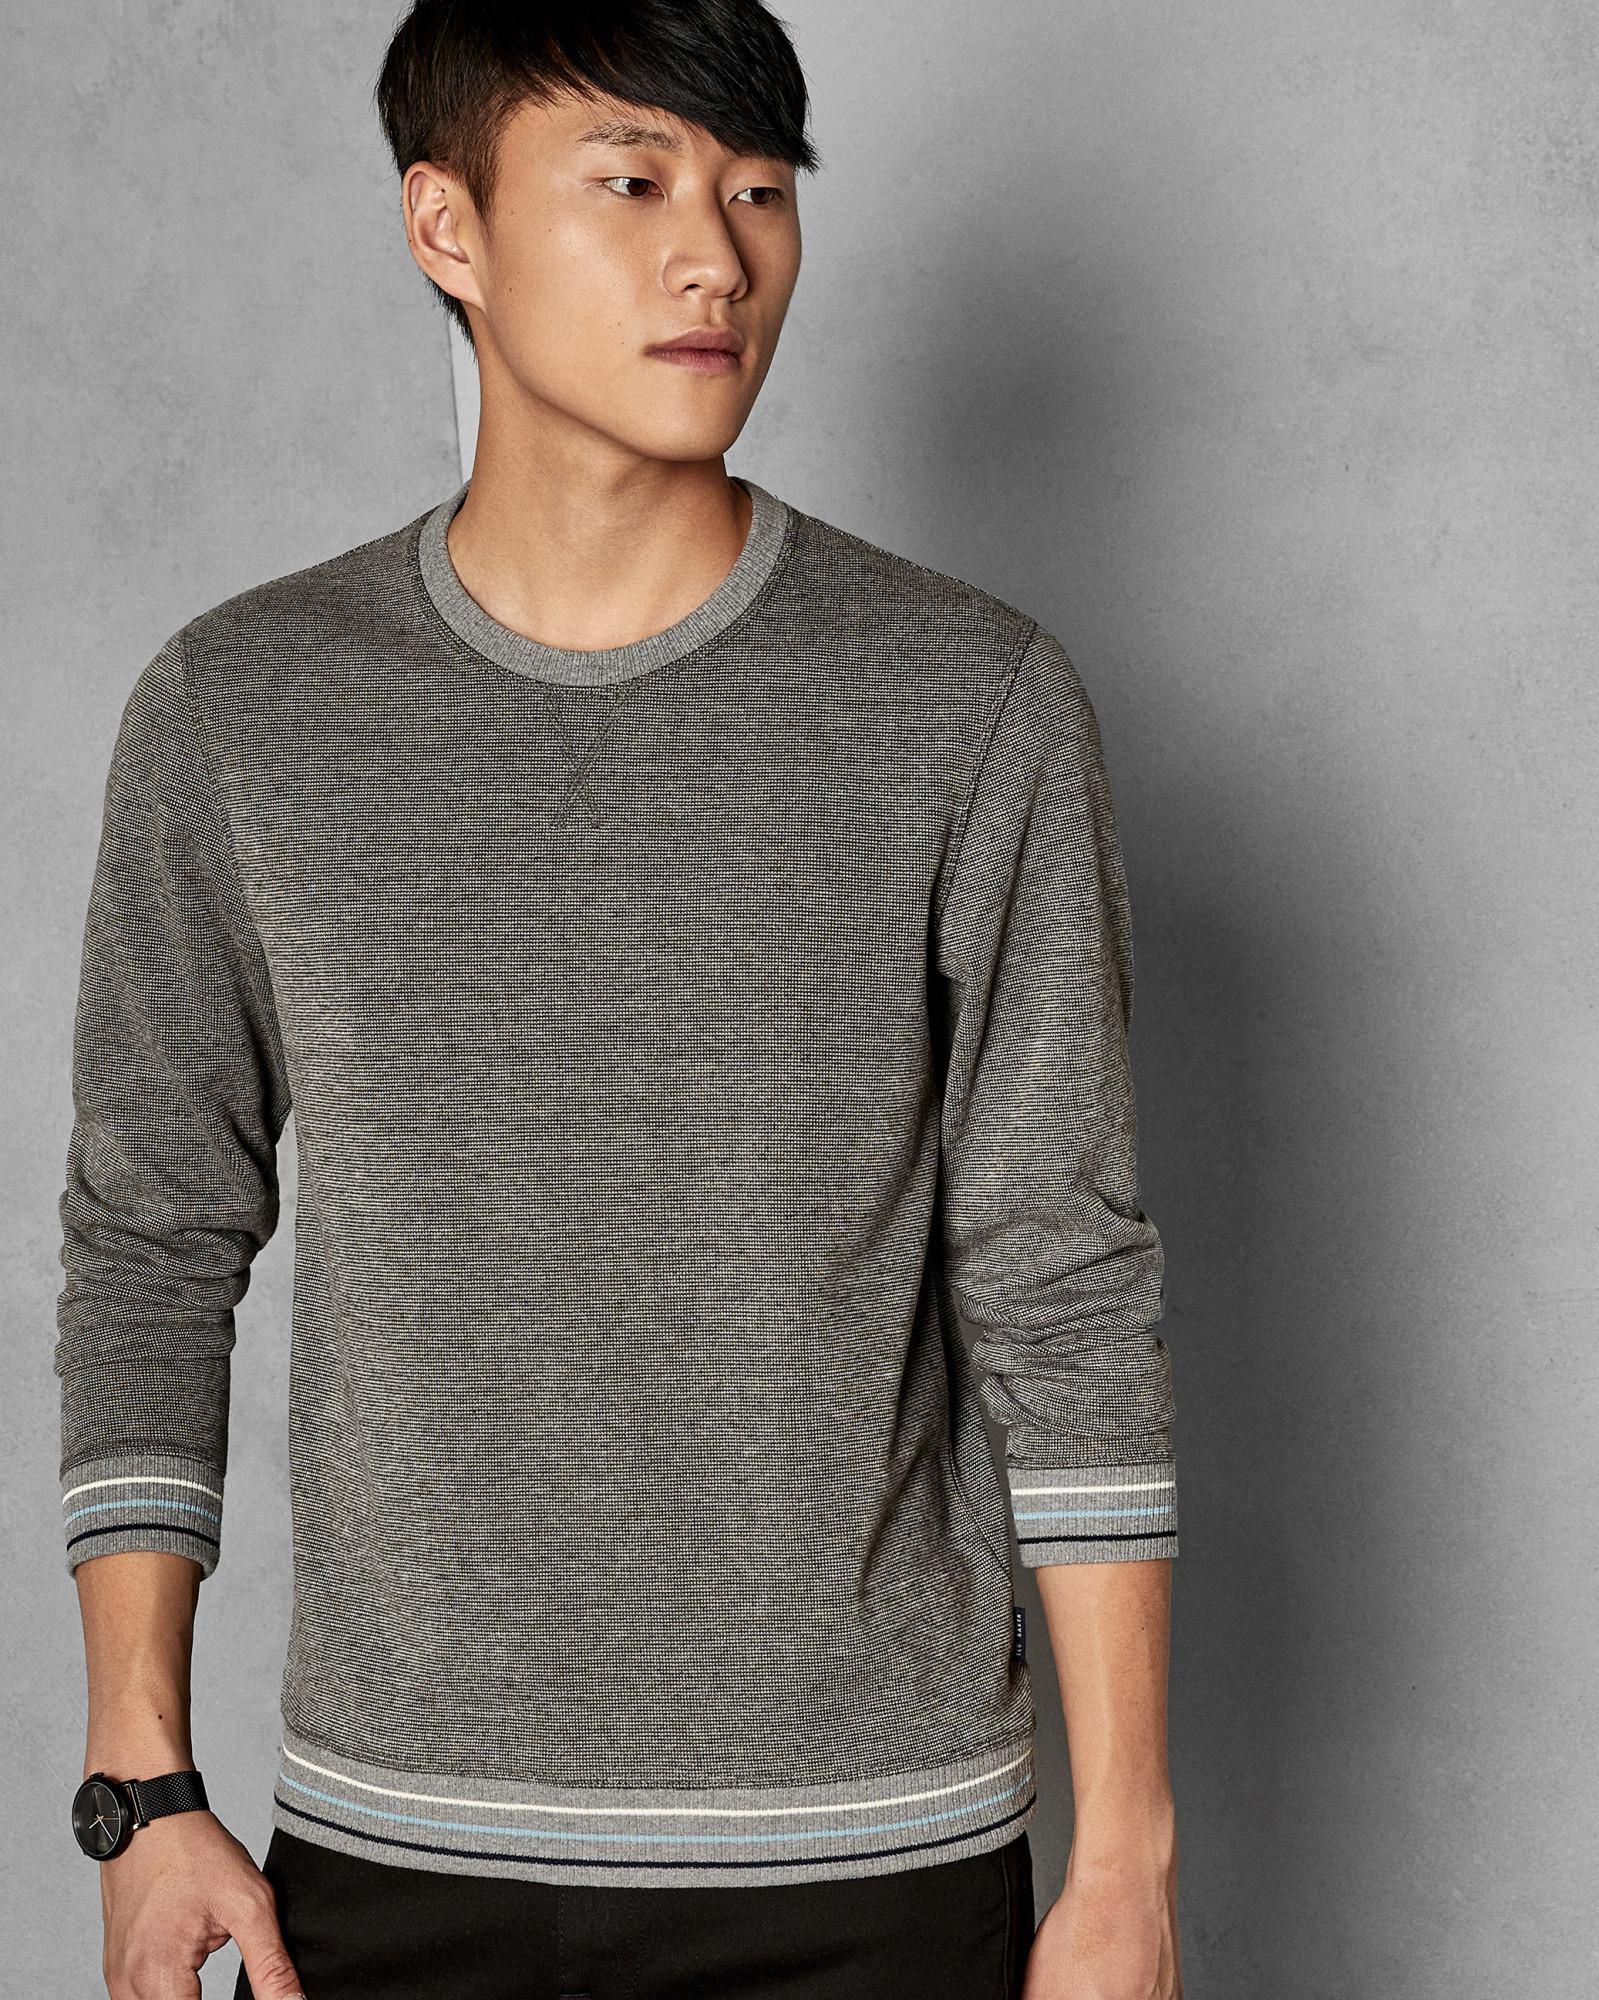 Lyst - Ted Baker Jersey Cotton Blend Sweatshirt in Gray for Men